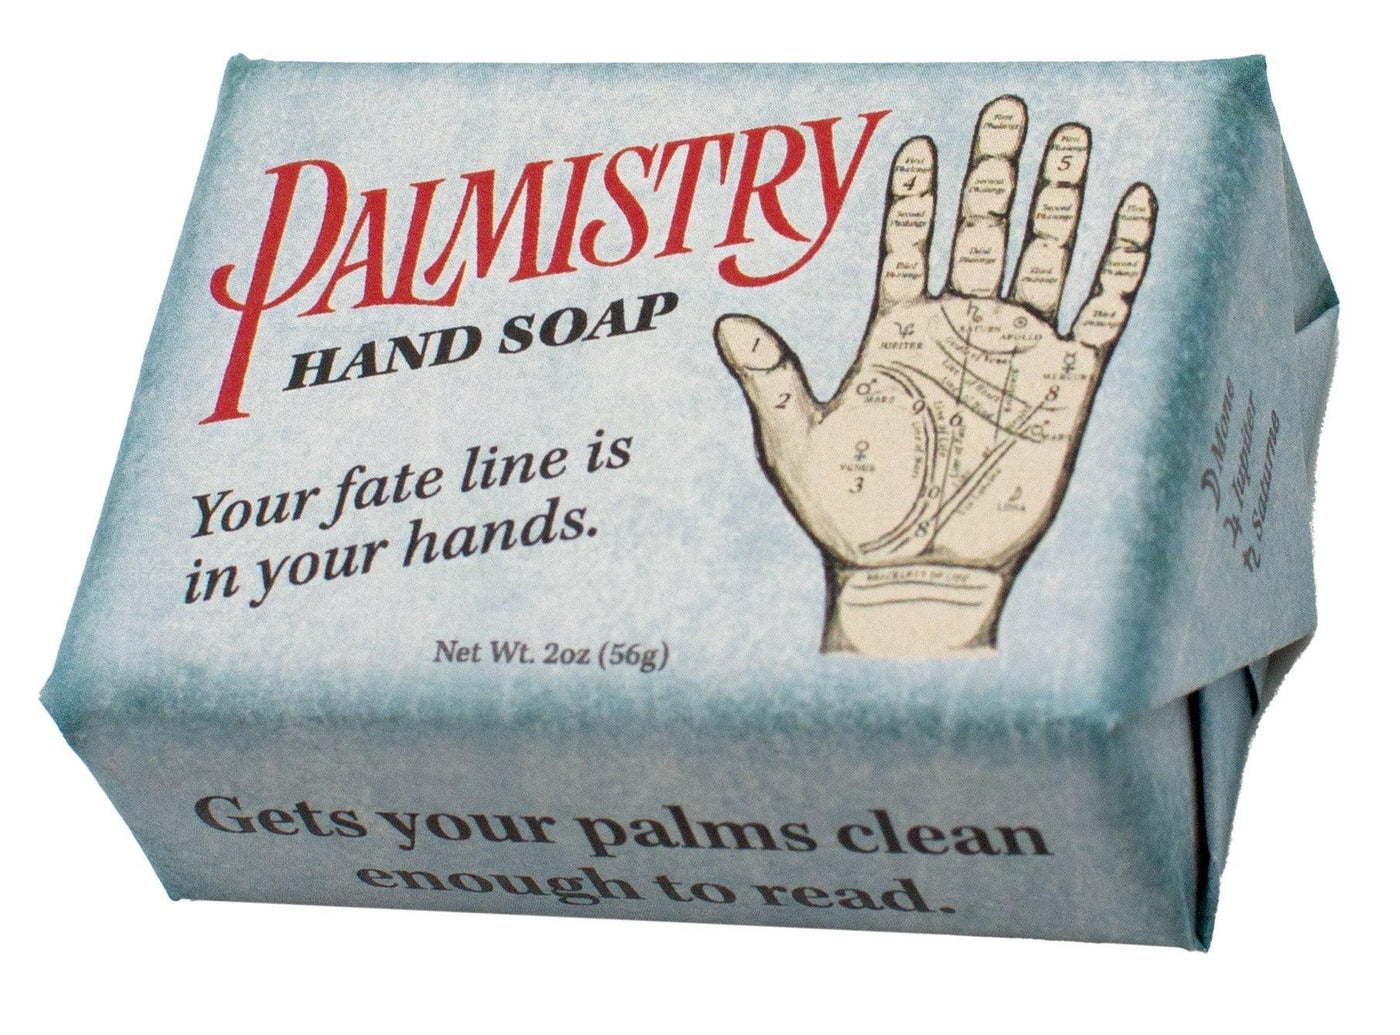 Palmistry Hand Soap